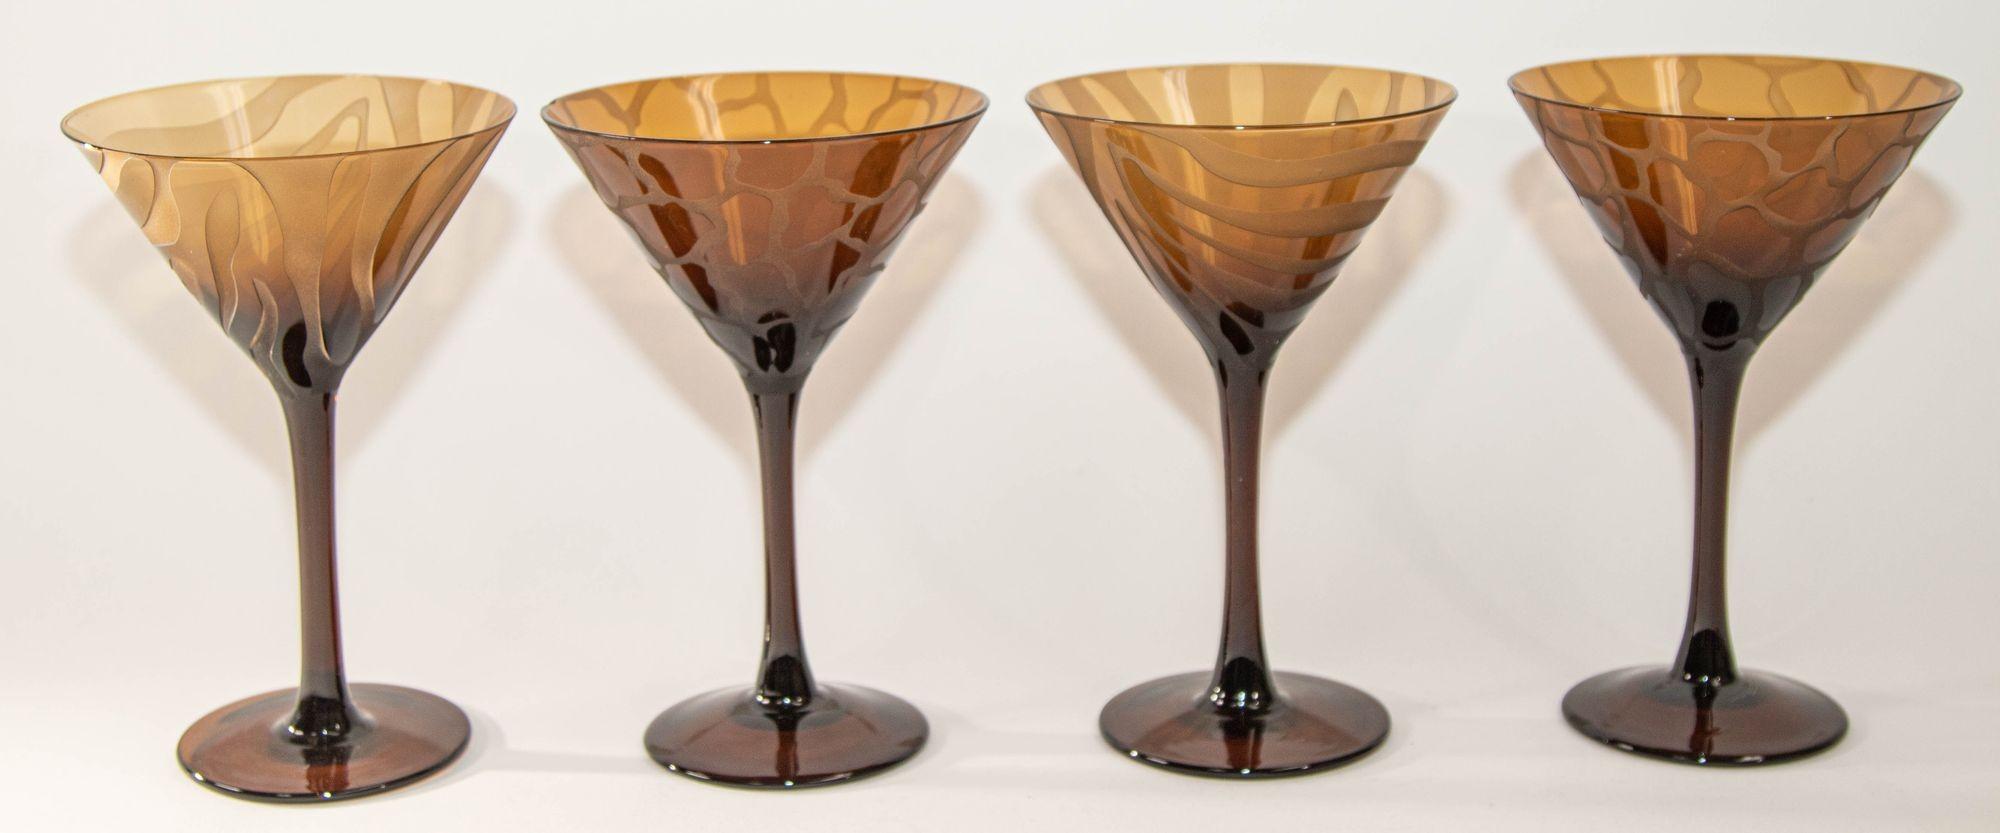 Post-Modern 1990s Murano Martini Stemmed Glasses Vintage Etched Barware Set of 4